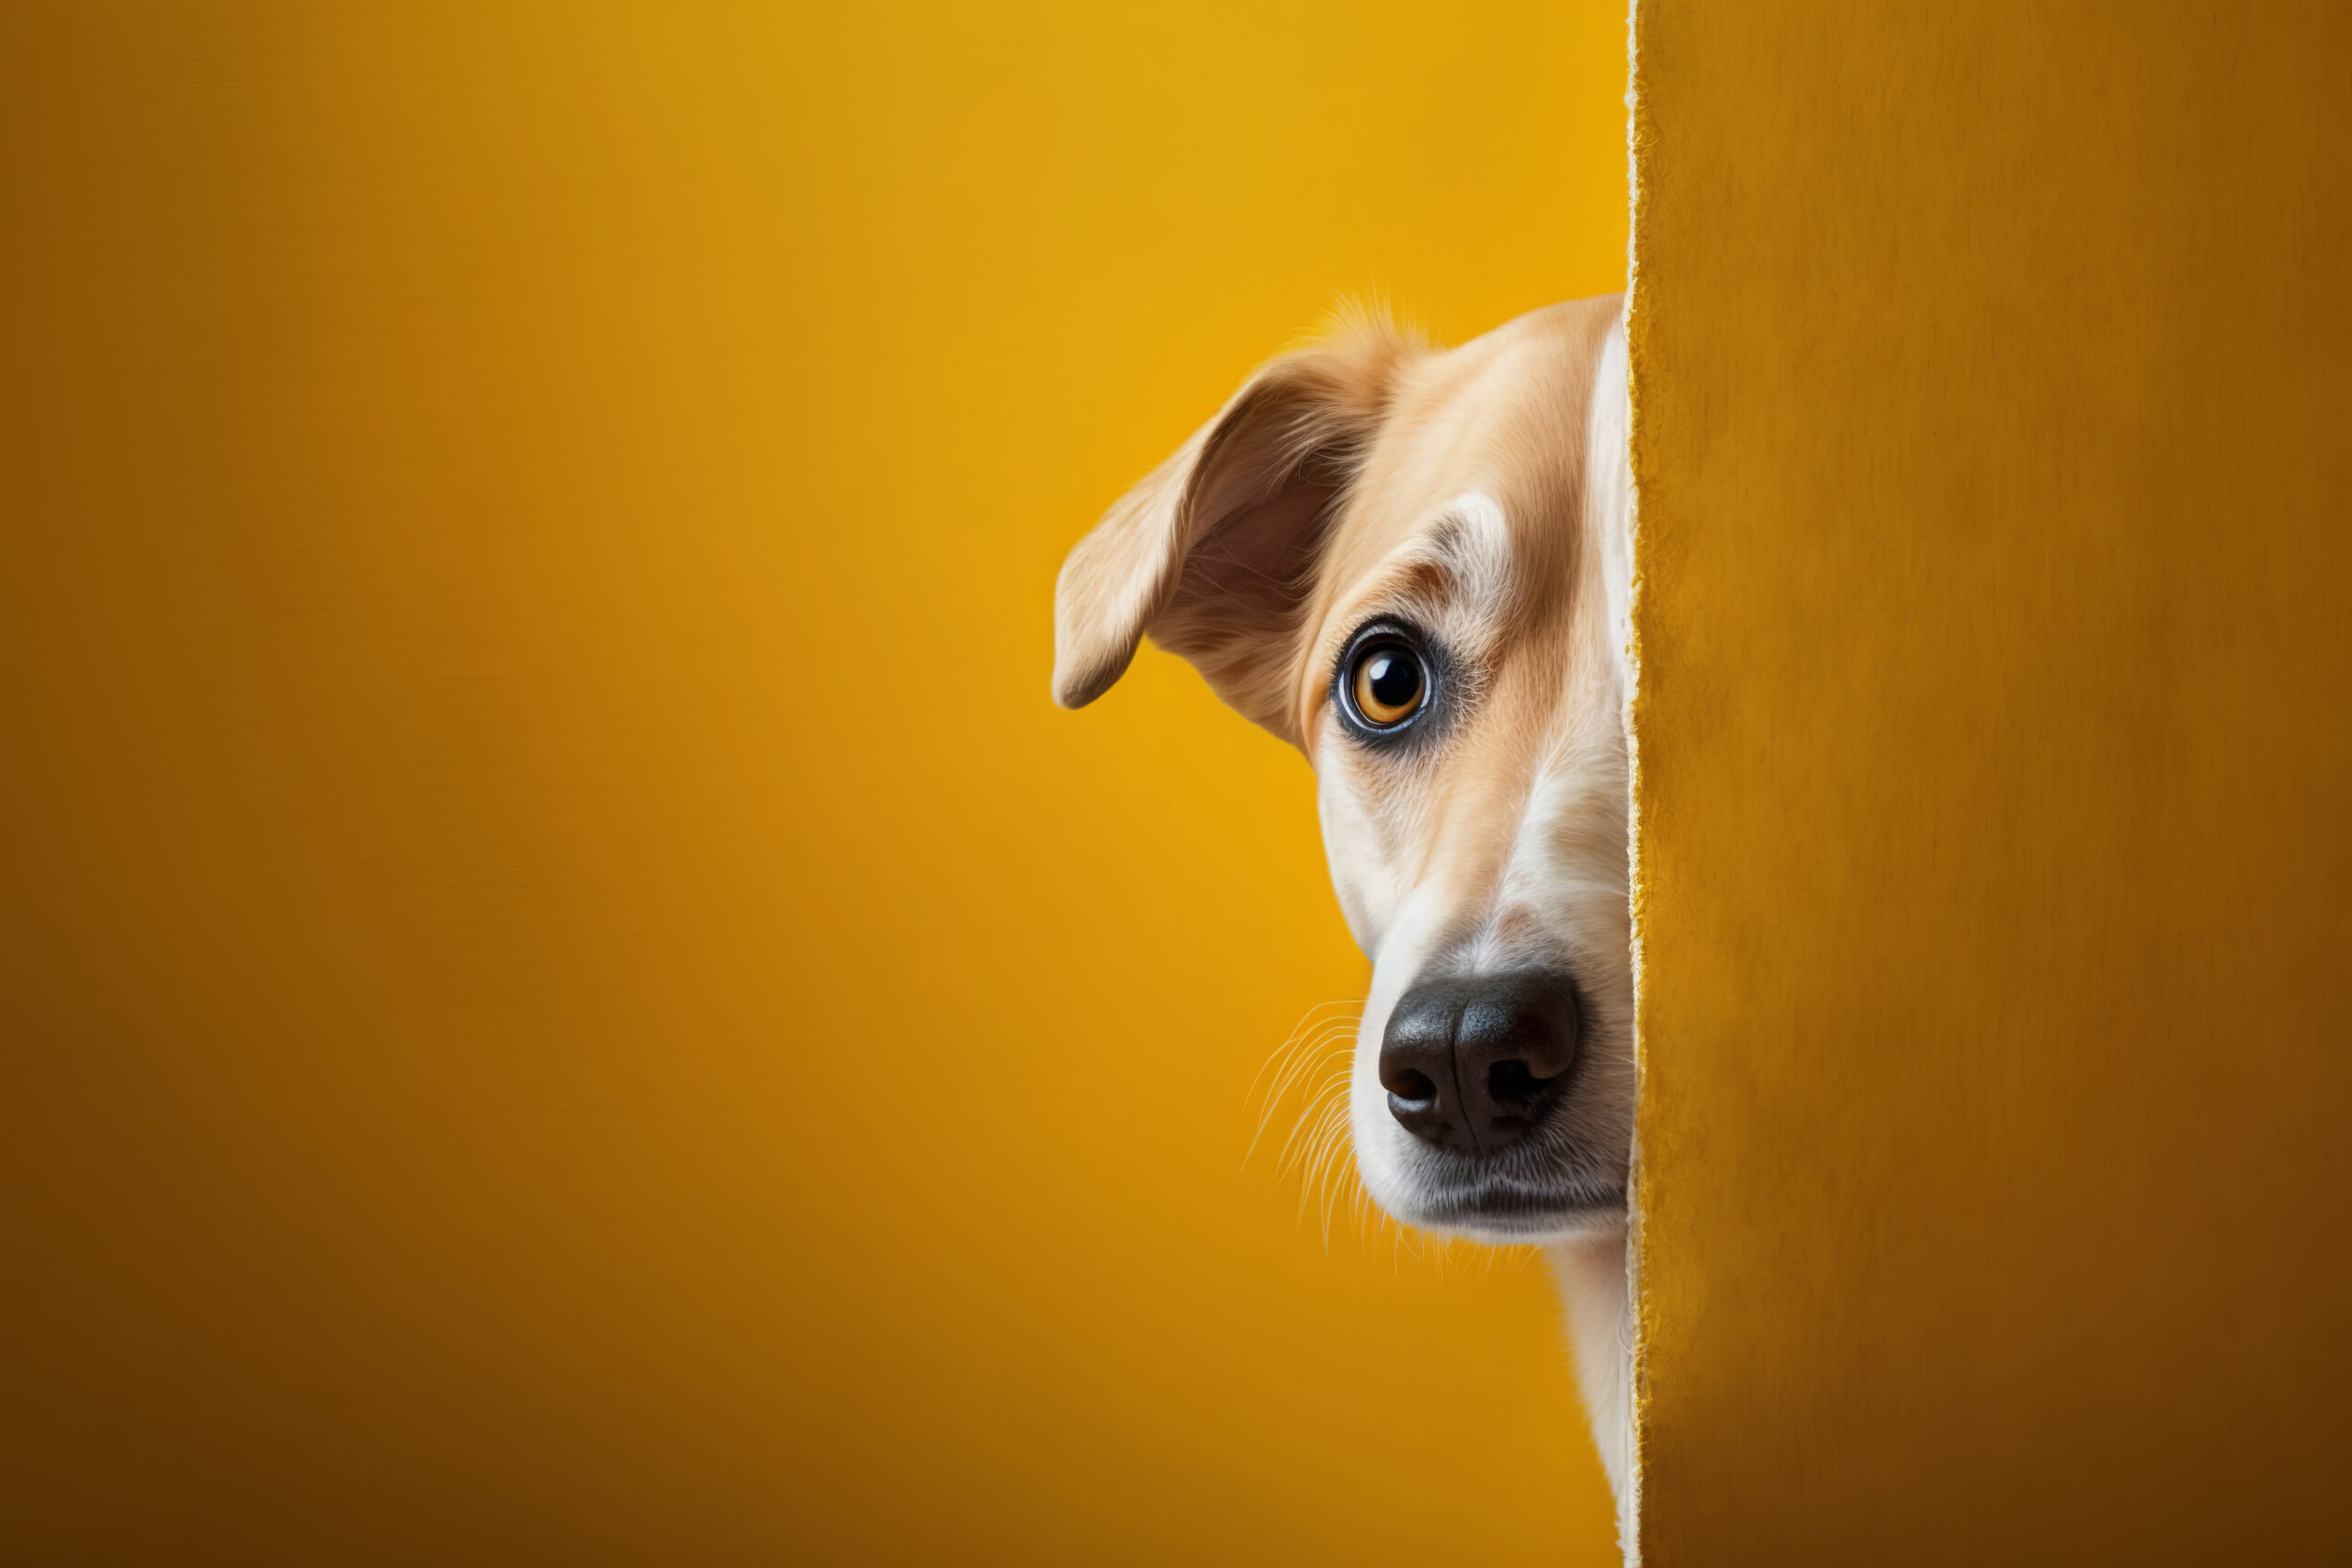 Cute dog peeking out of a hole in a yellow wall. Generative AI